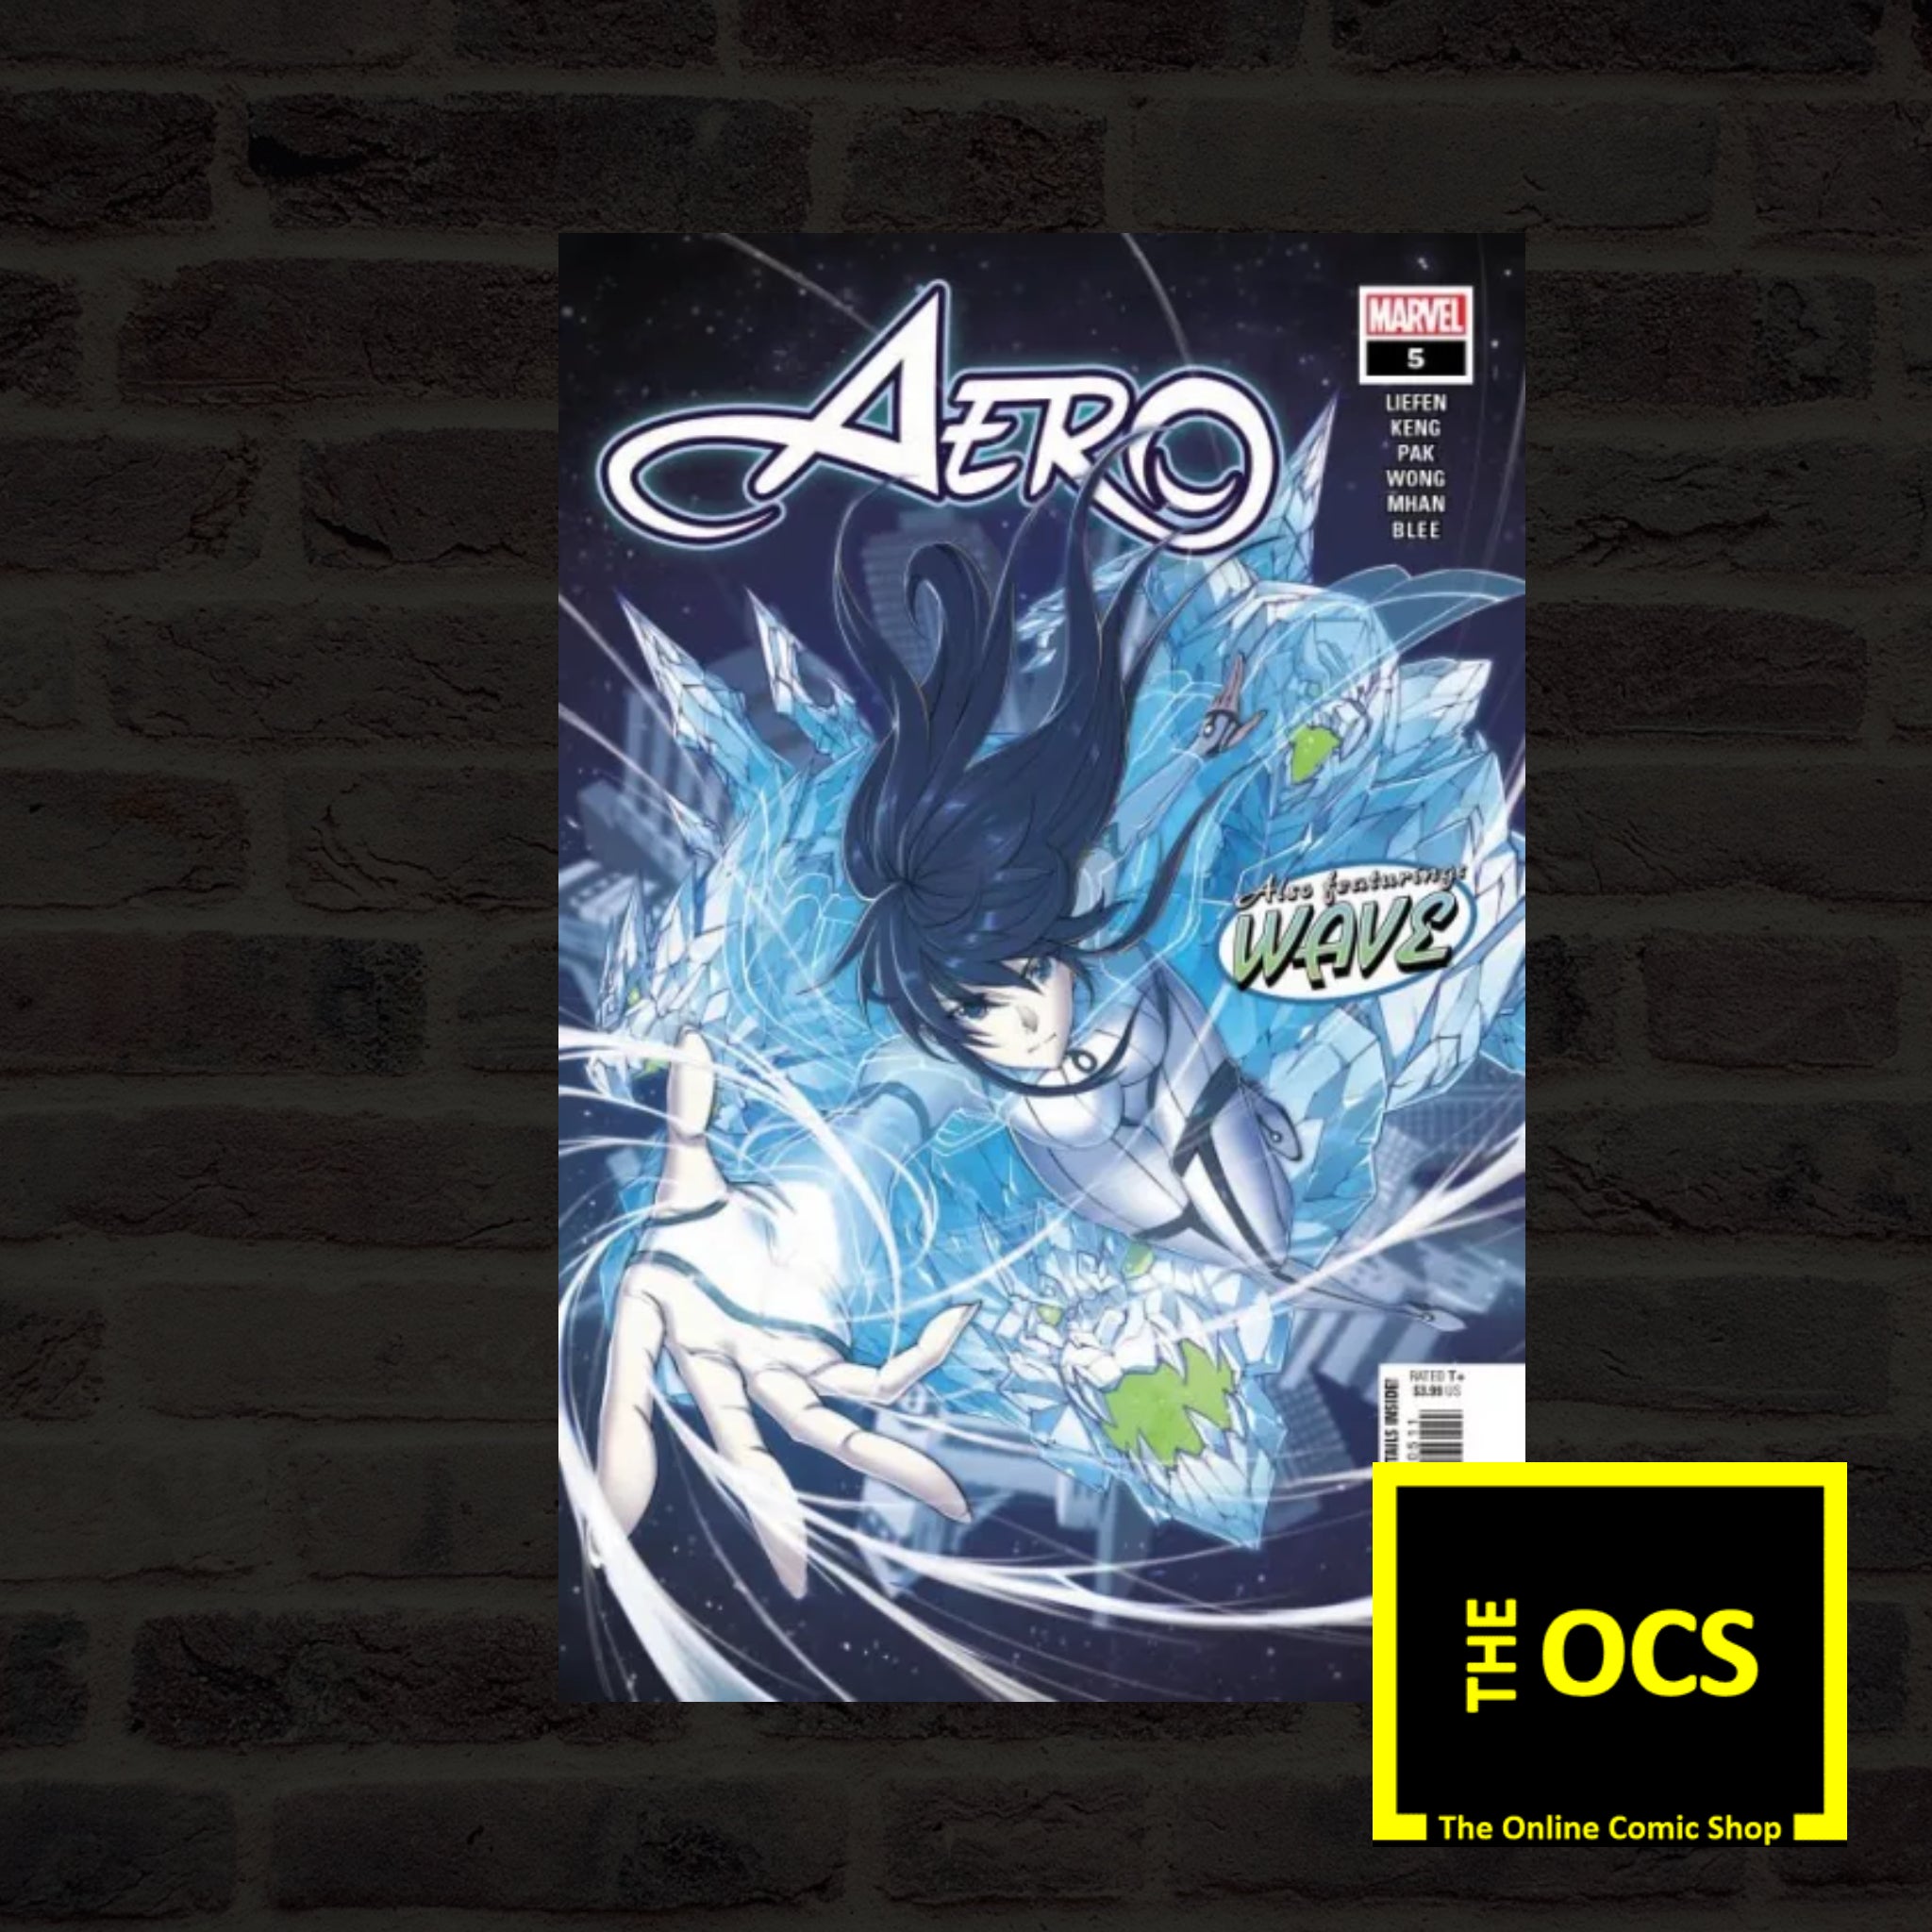 Marvel Comics Aero #05 Regular Cover